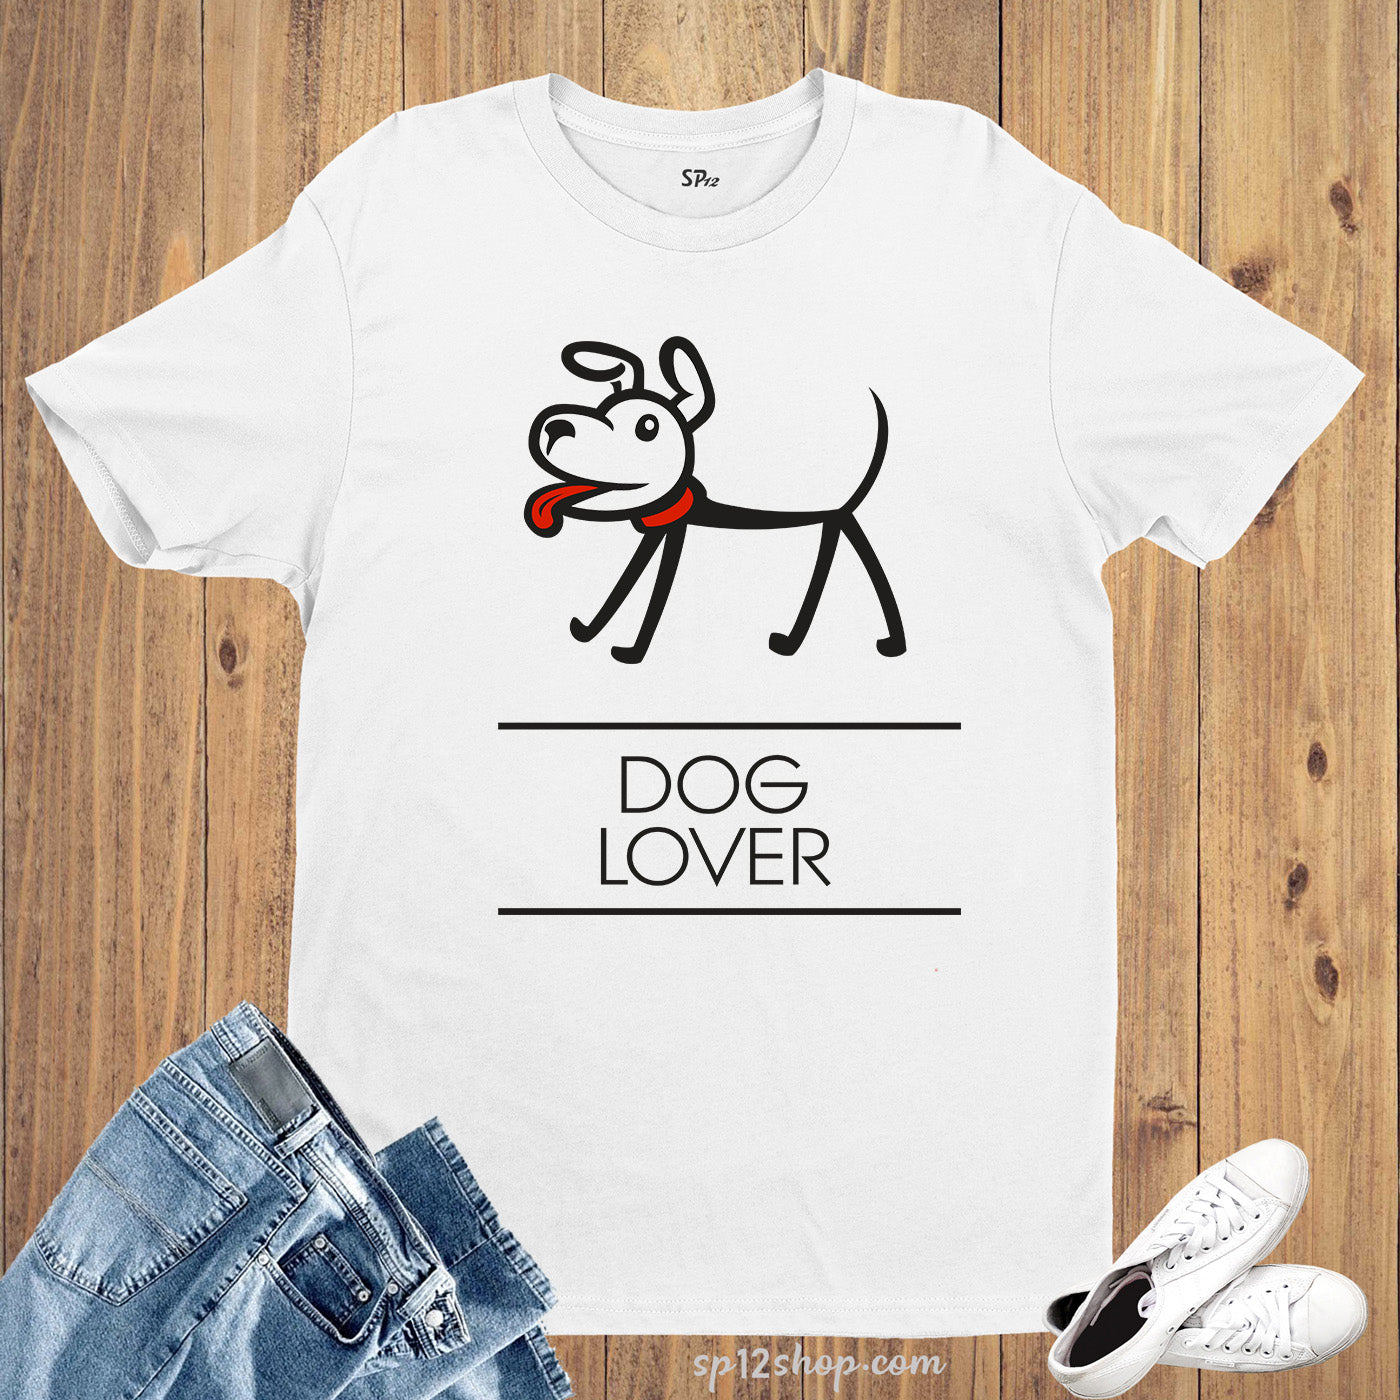 Dog Lover Funny Animal T Shirt